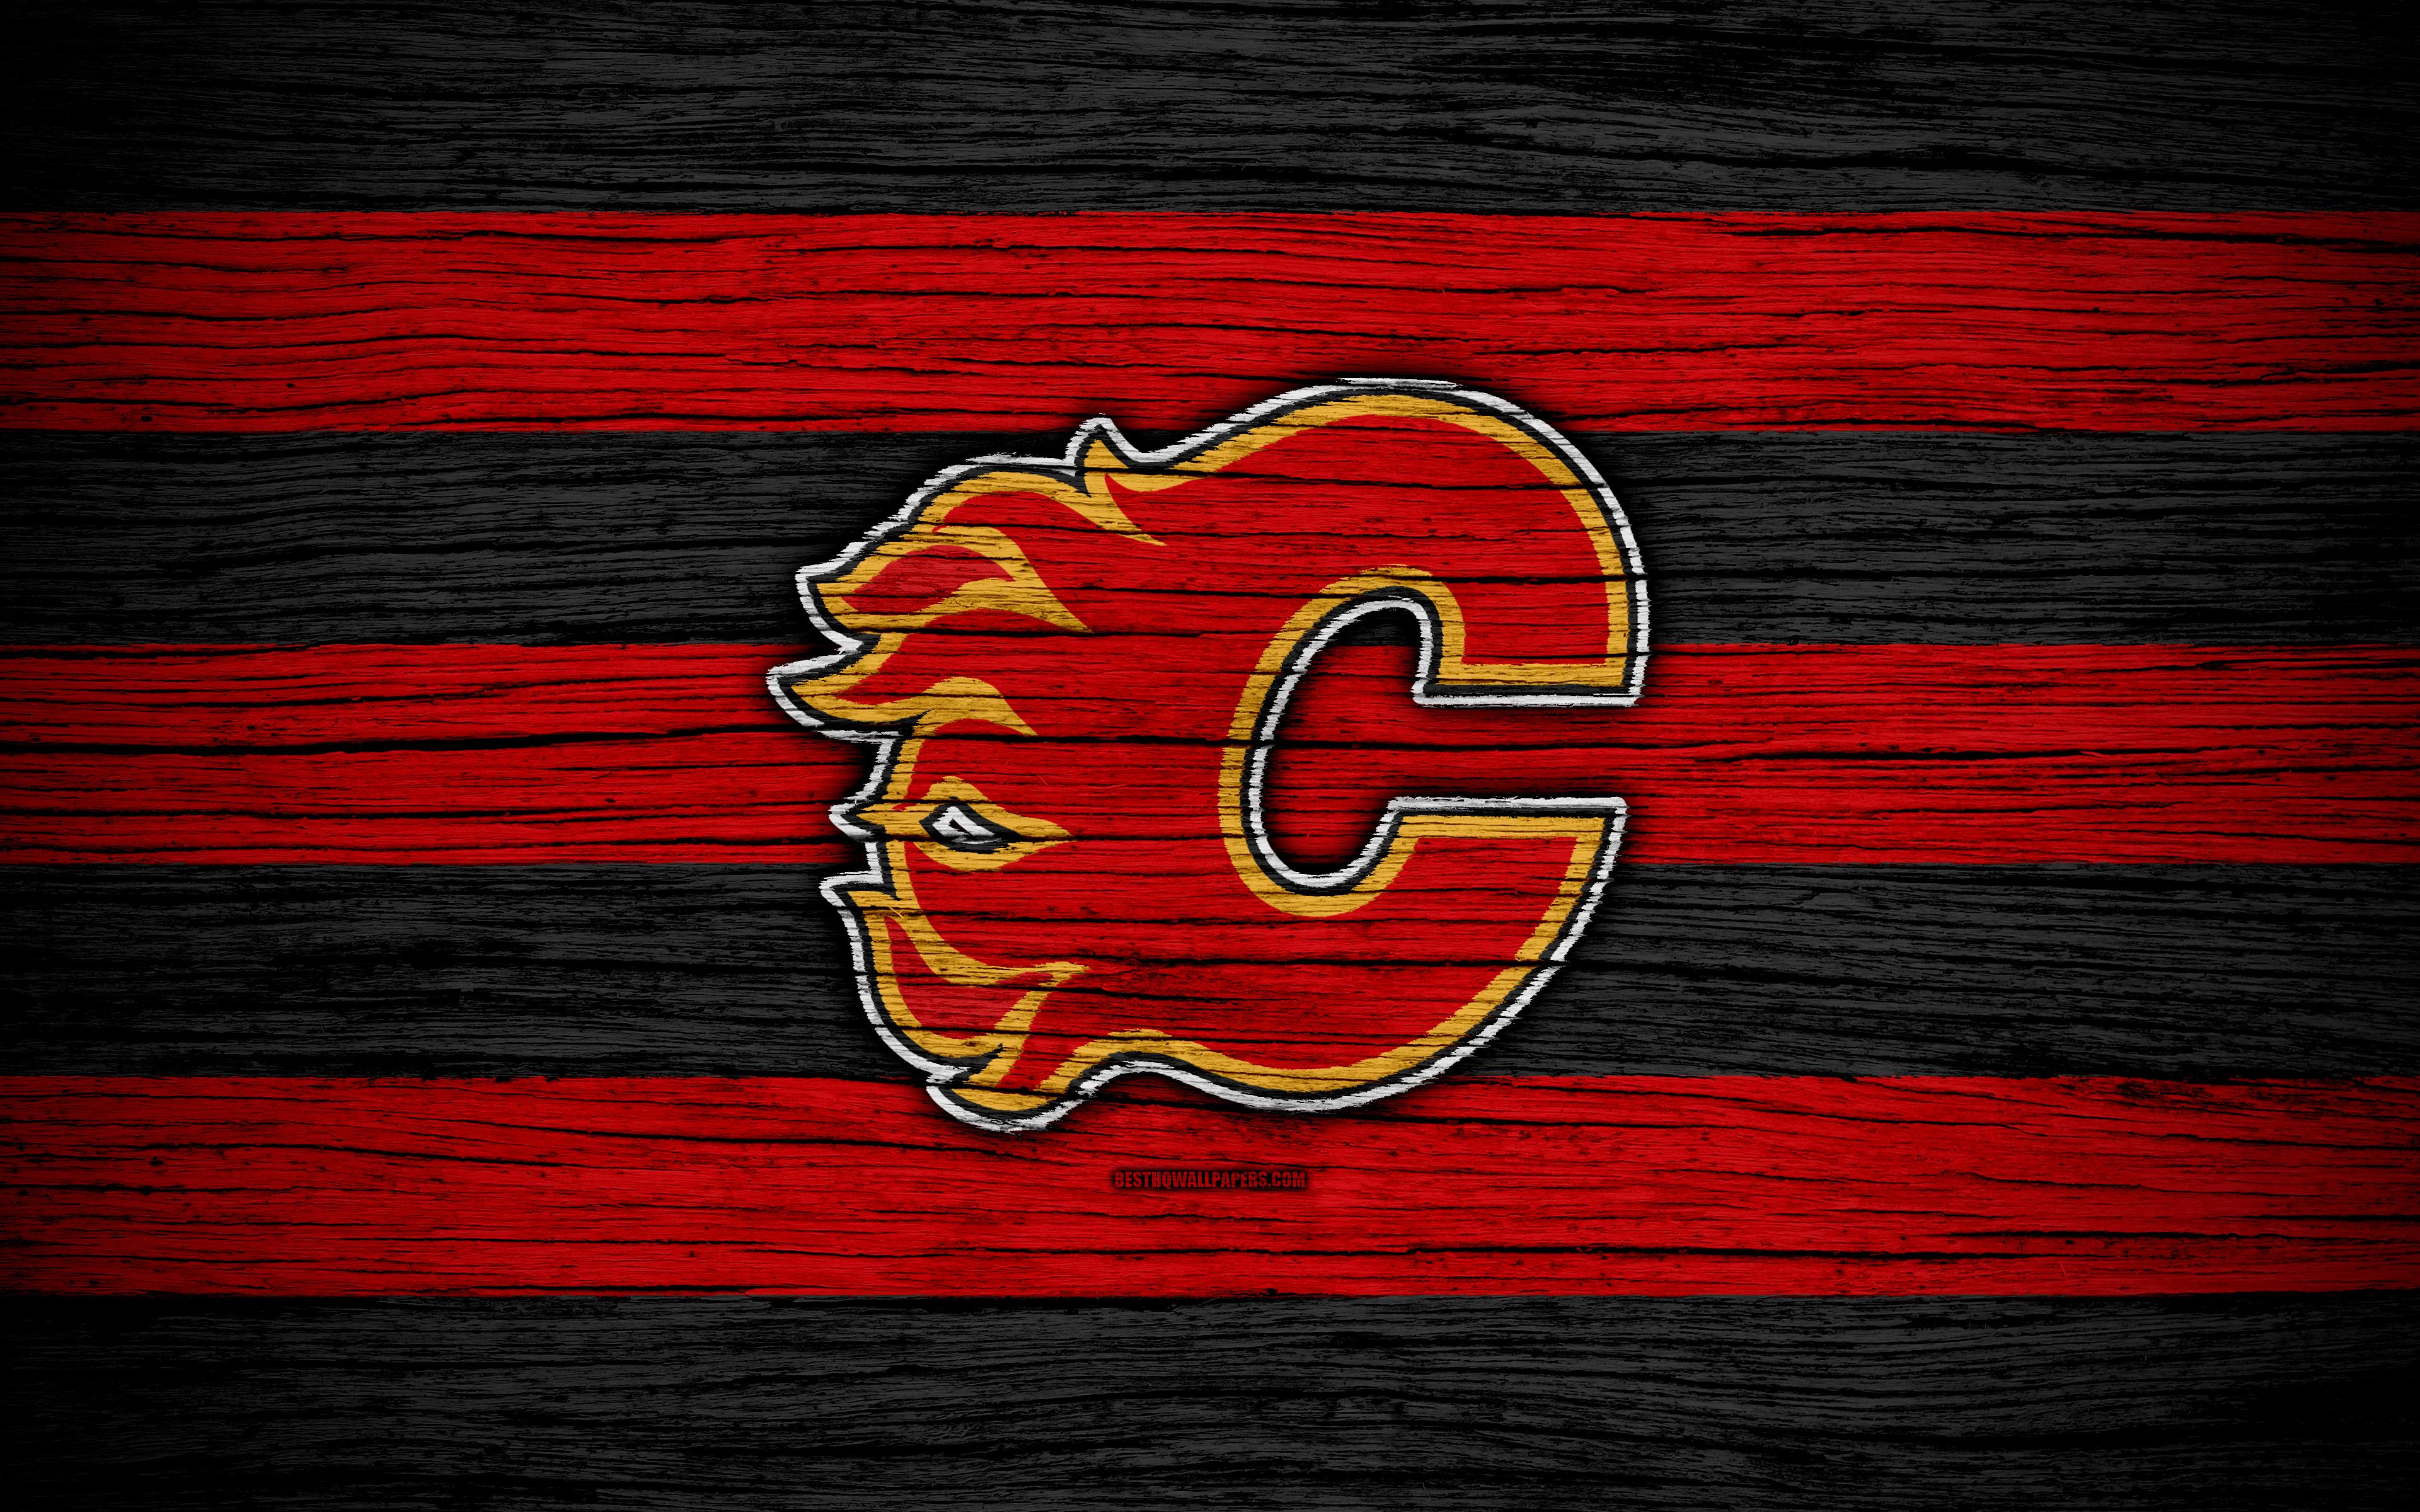 Download wallpaper Calgary Flames, 4k, NHL, hockey club, Western